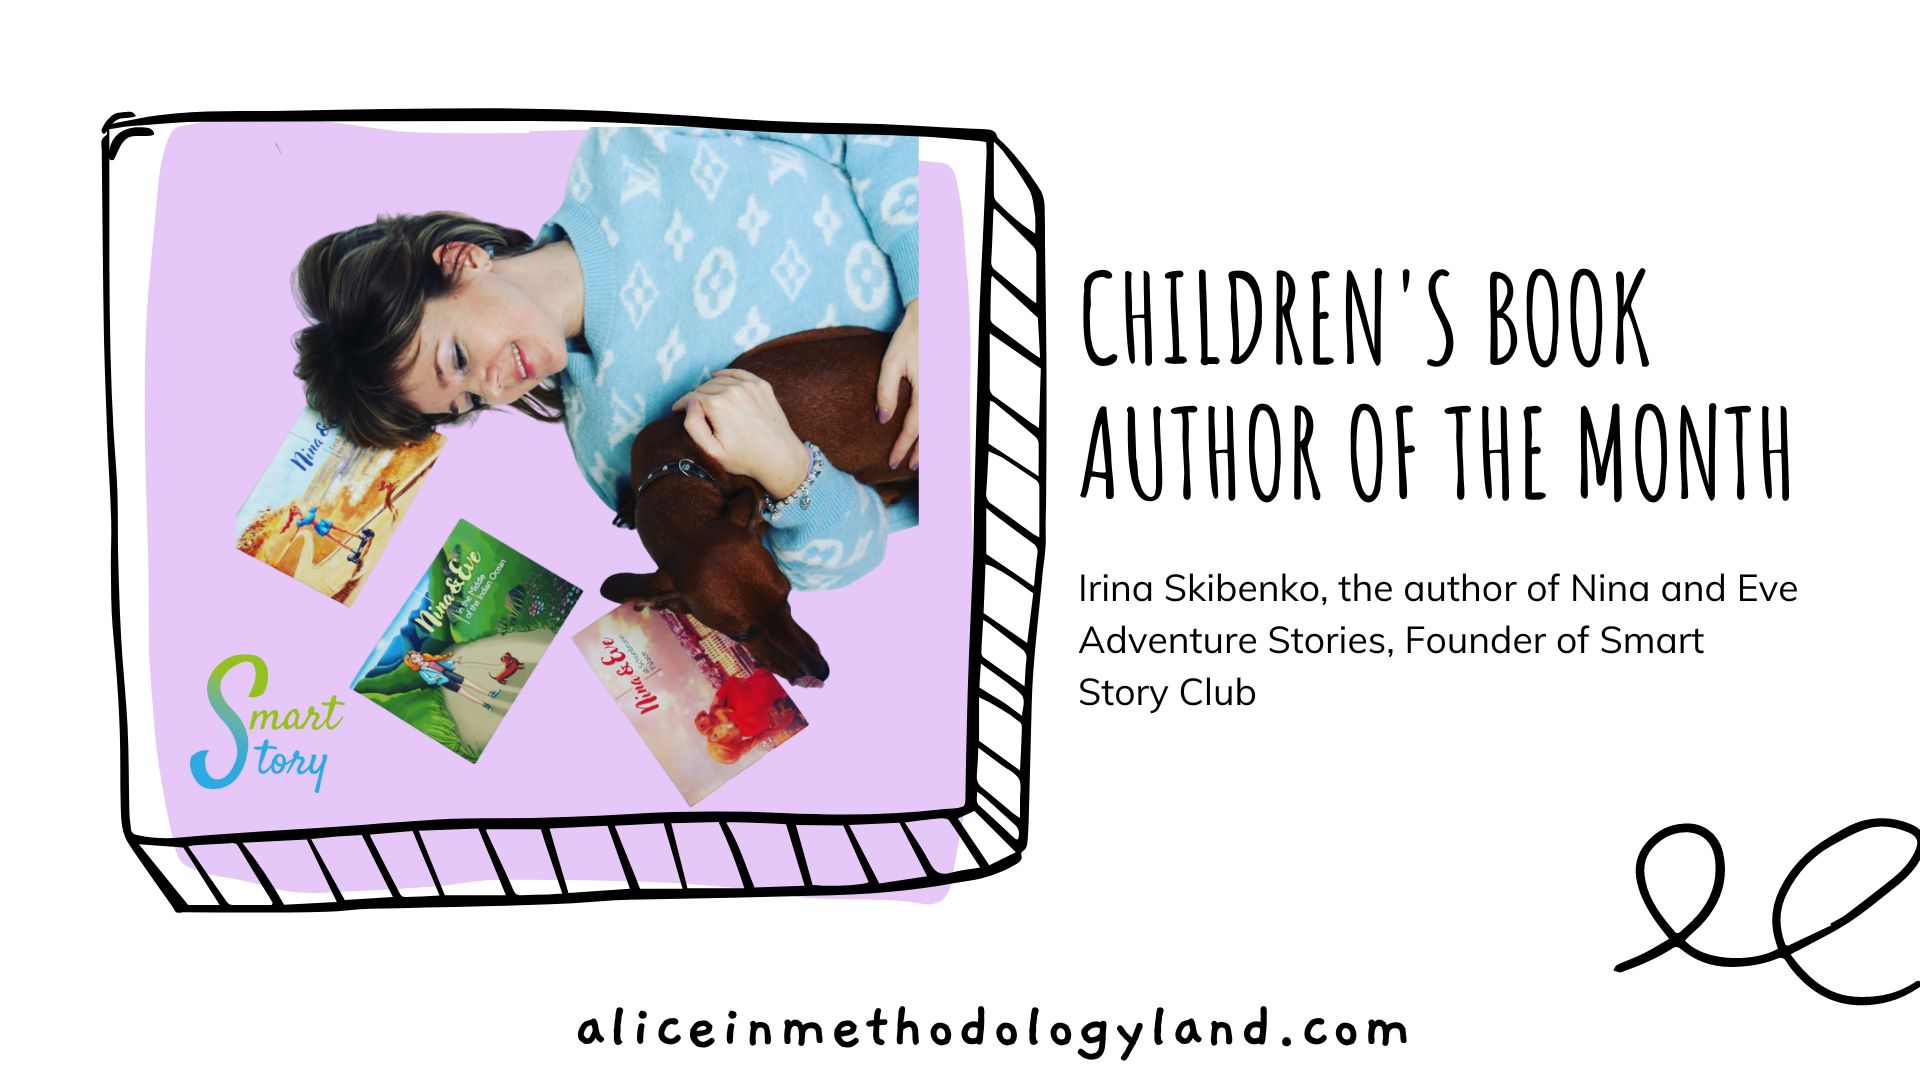 Children’s Book Author of the Month – Irina Skibenko, the author of Nina and Eve Adventure Stories